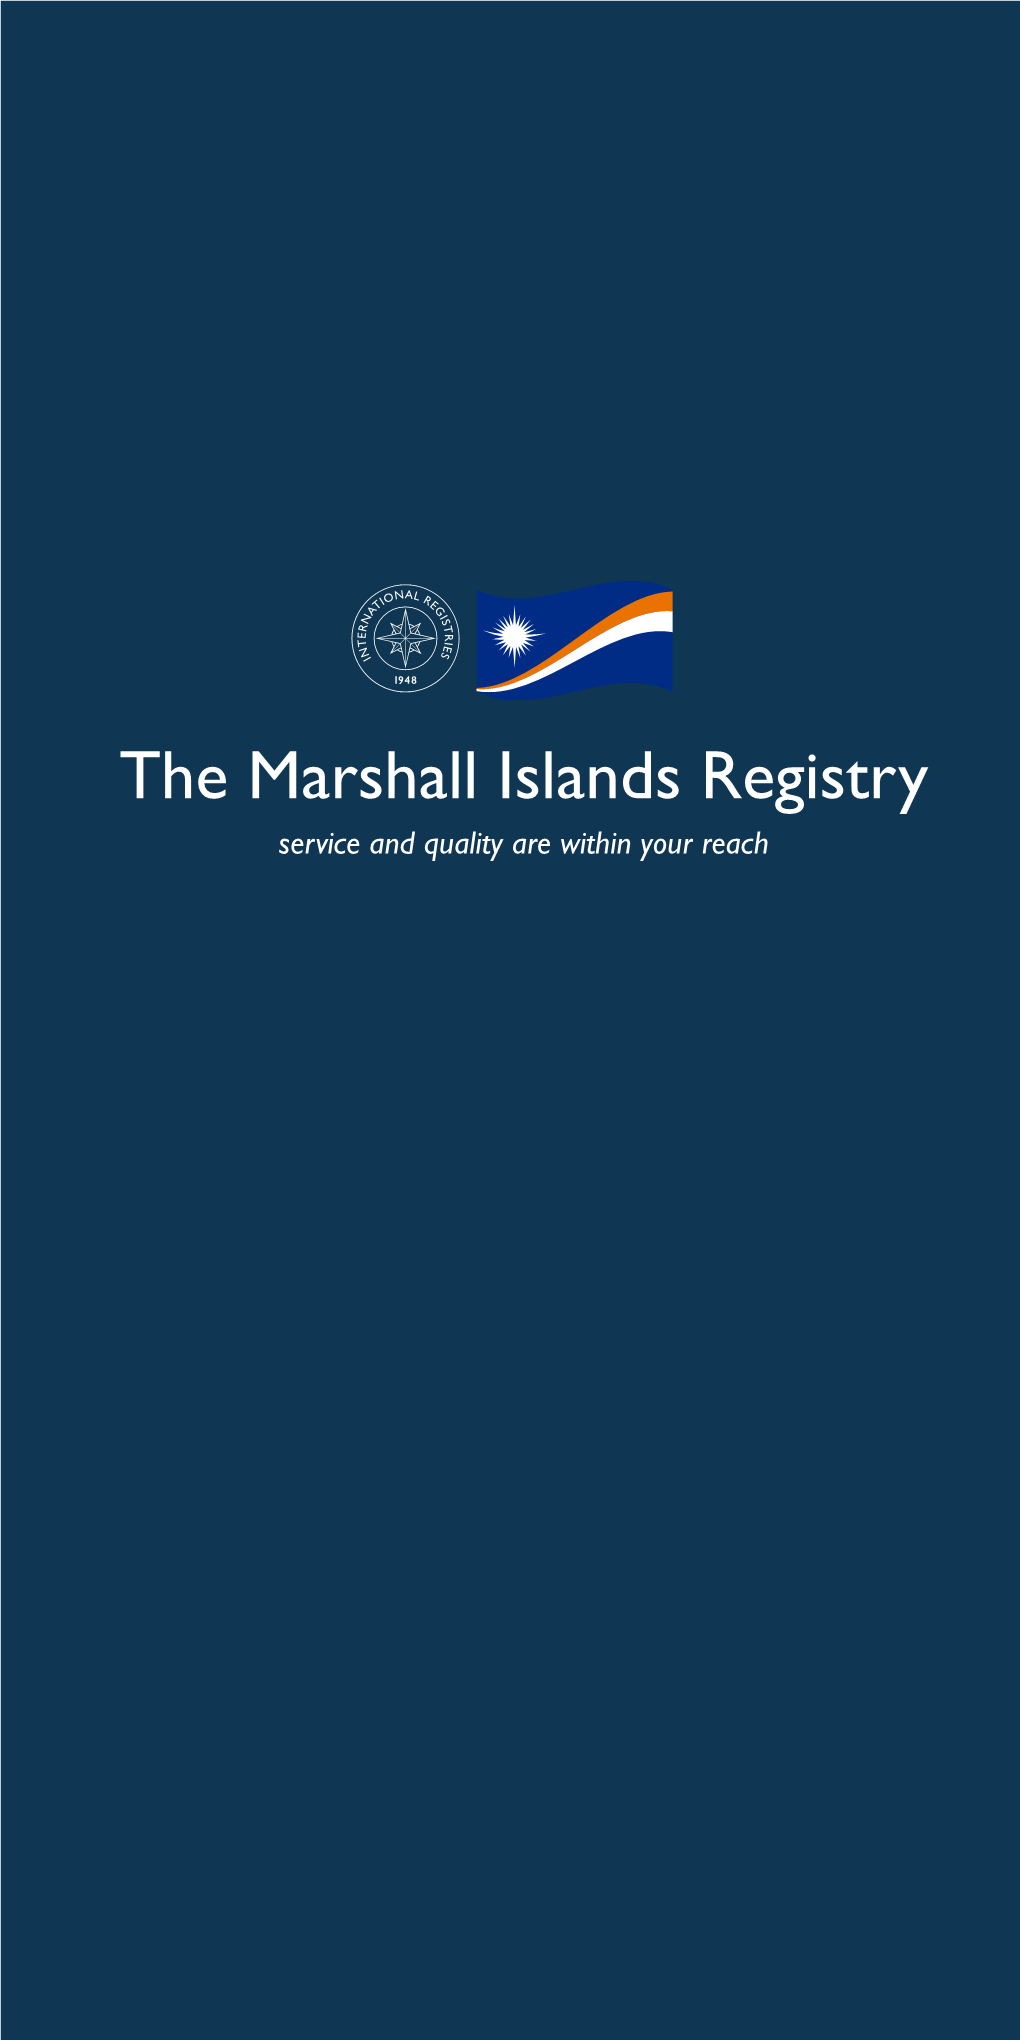 The Marshall Islands Registry